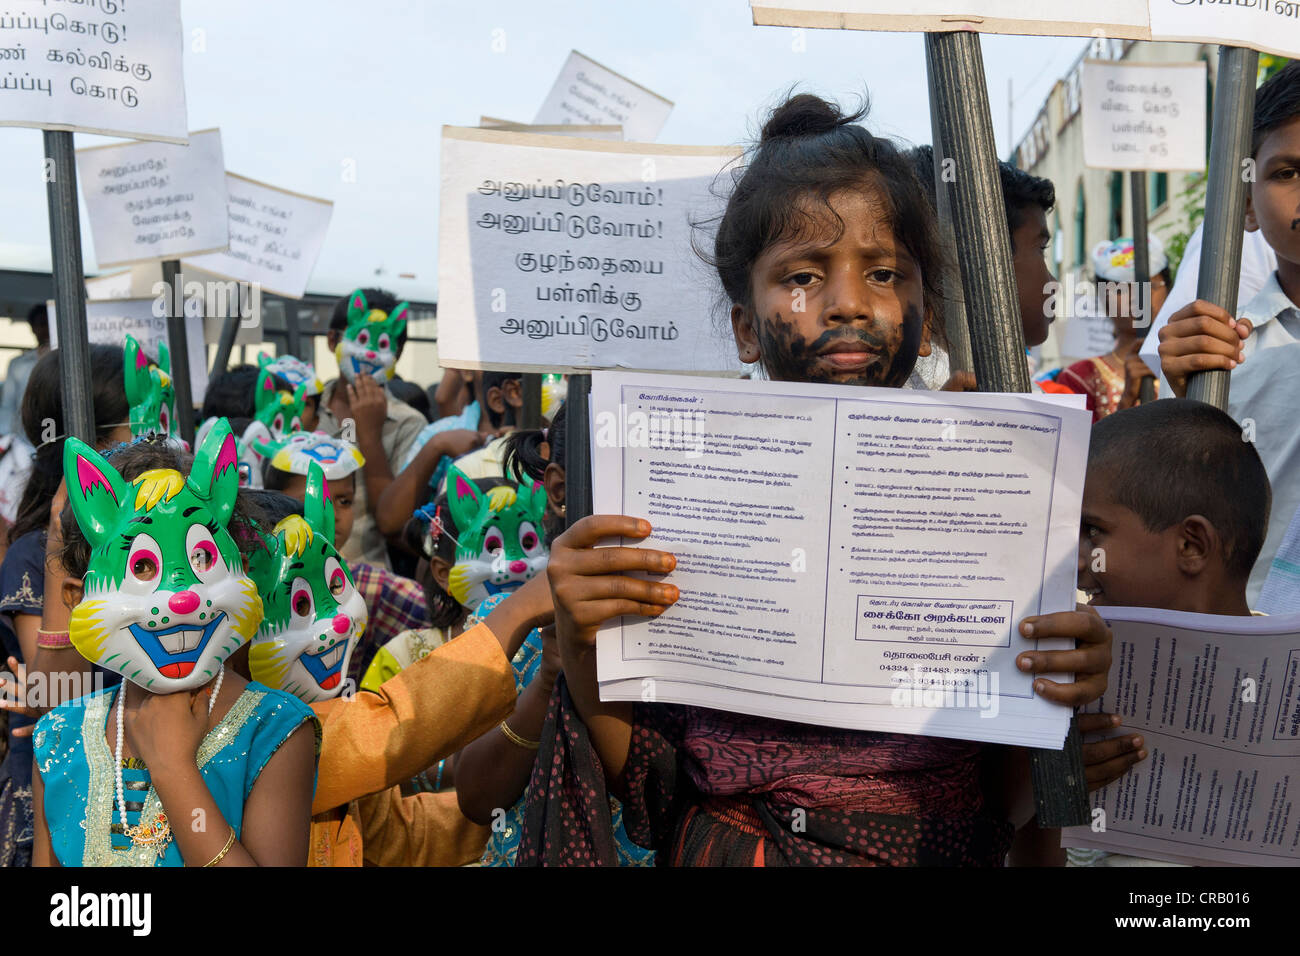 Manifestation contre le travail des enfants, Karur, Tamil Nadu, Inde, Asie Banque D'Images